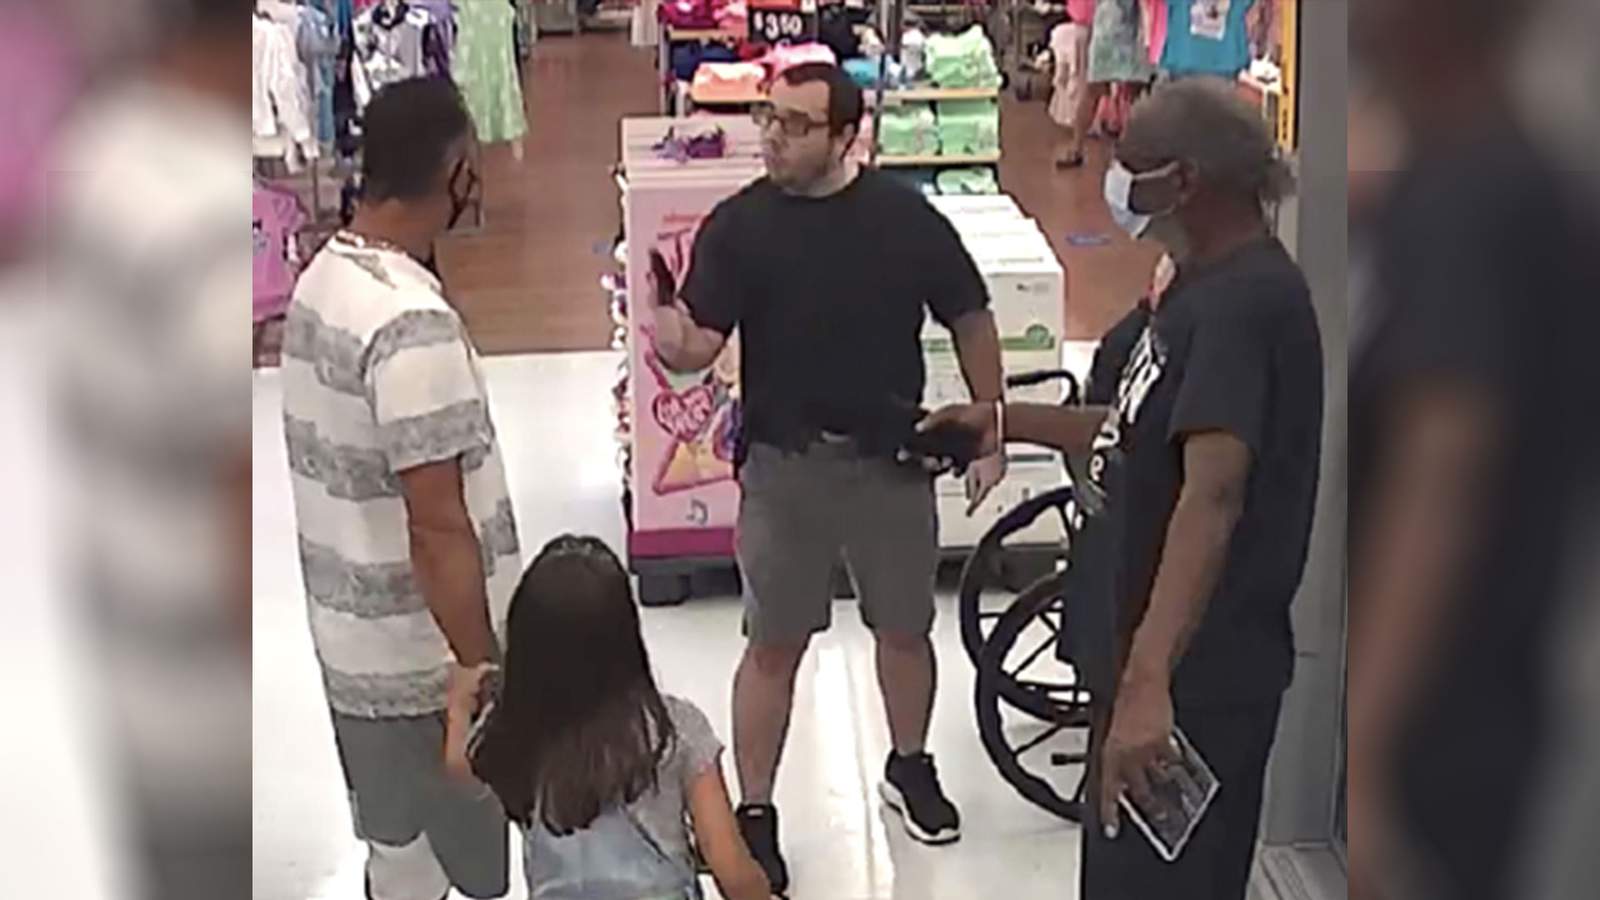 Walmart shopper pulls gun on man in dispute over mask, police say